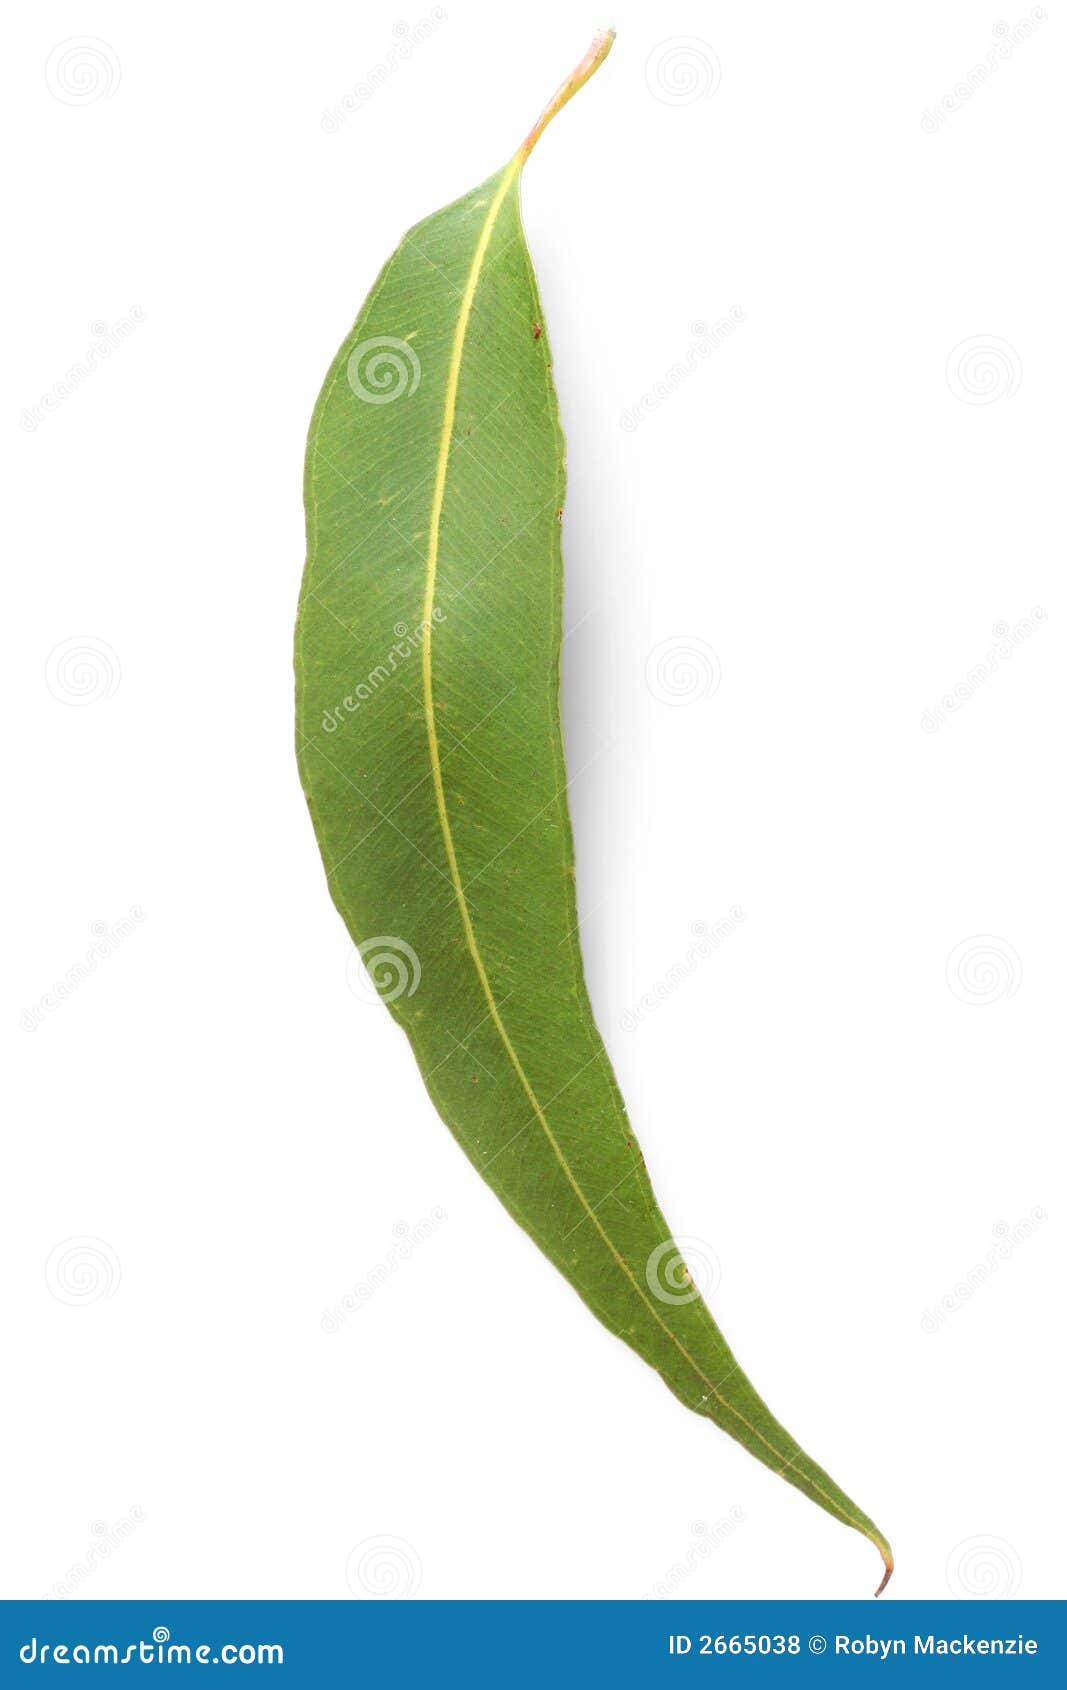 clipart gum leaf - photo #20